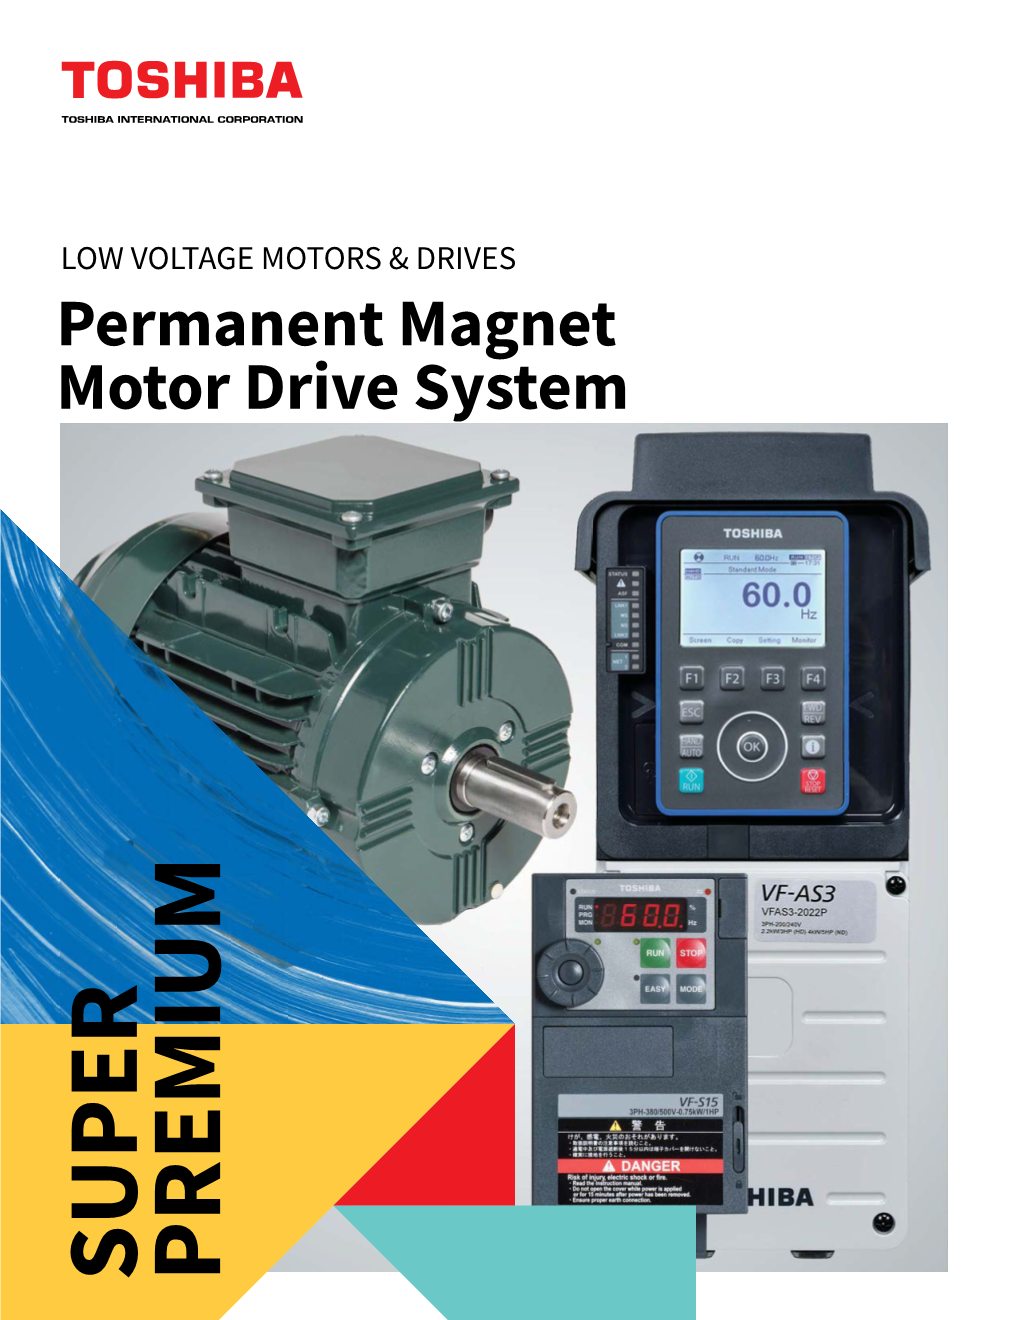 Permanent Magnet System Brochure